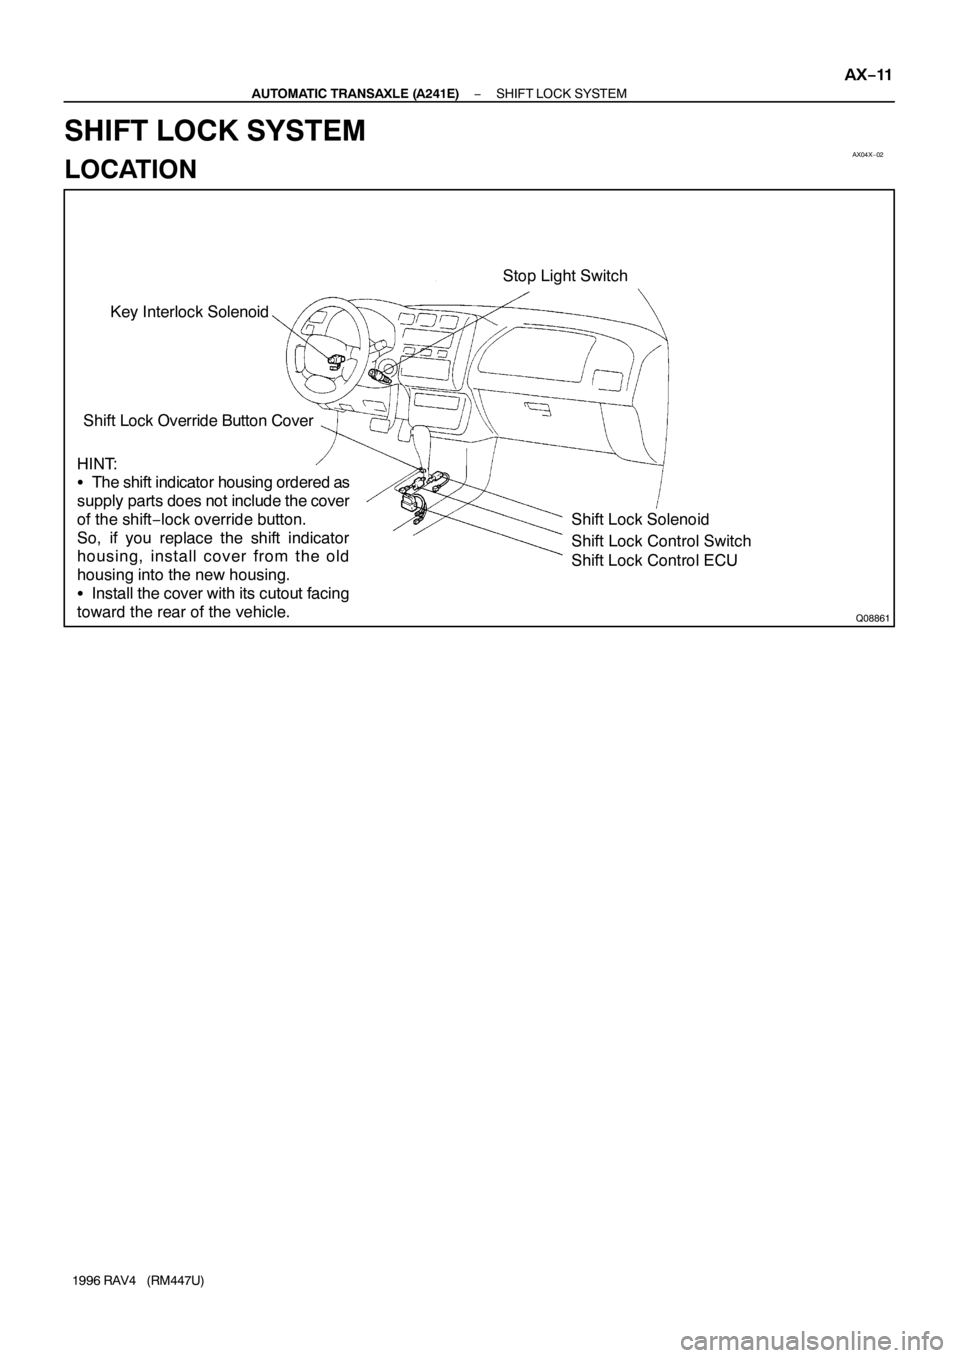 TOYOTA RAV4 1996  Service User Guide AX04X−02
Q08861
Key Interlock SolenoidStop Light Switch
Shift Lock Override Button Cover
Shift Lock Solenoid
Shift Lock Control Switch
Shift Lock Control ECU HINT: 
  The shift indicator housing or